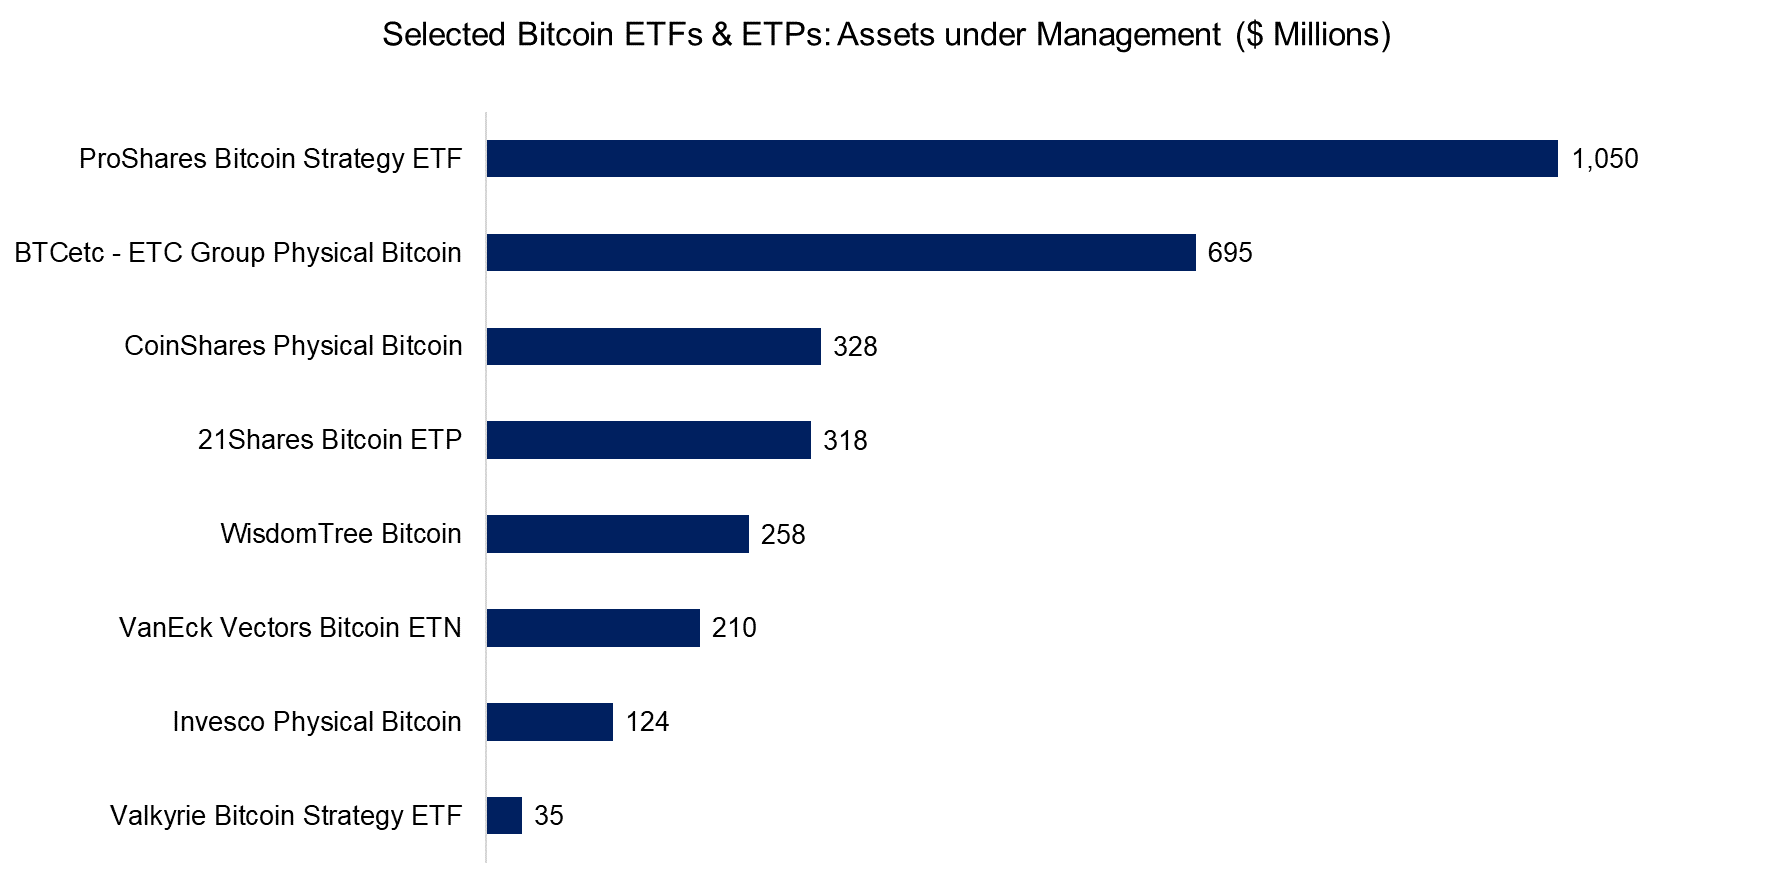 Selected Bitcoin ETFs & ETPs Assets under Management ($ Millions)